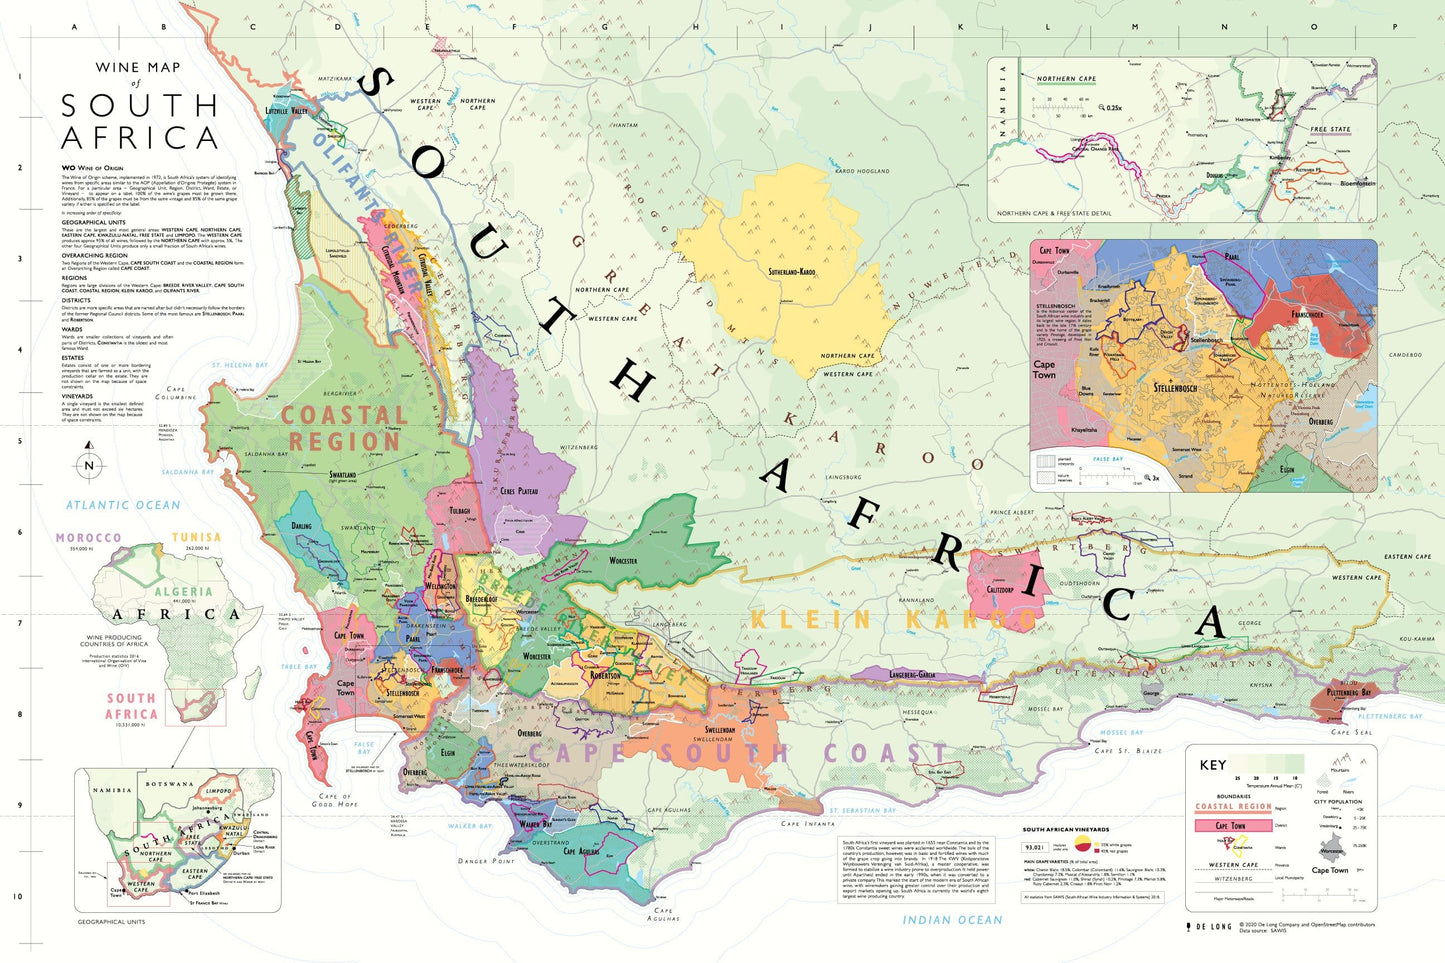 Wine map of South Africa, bookshelf edition